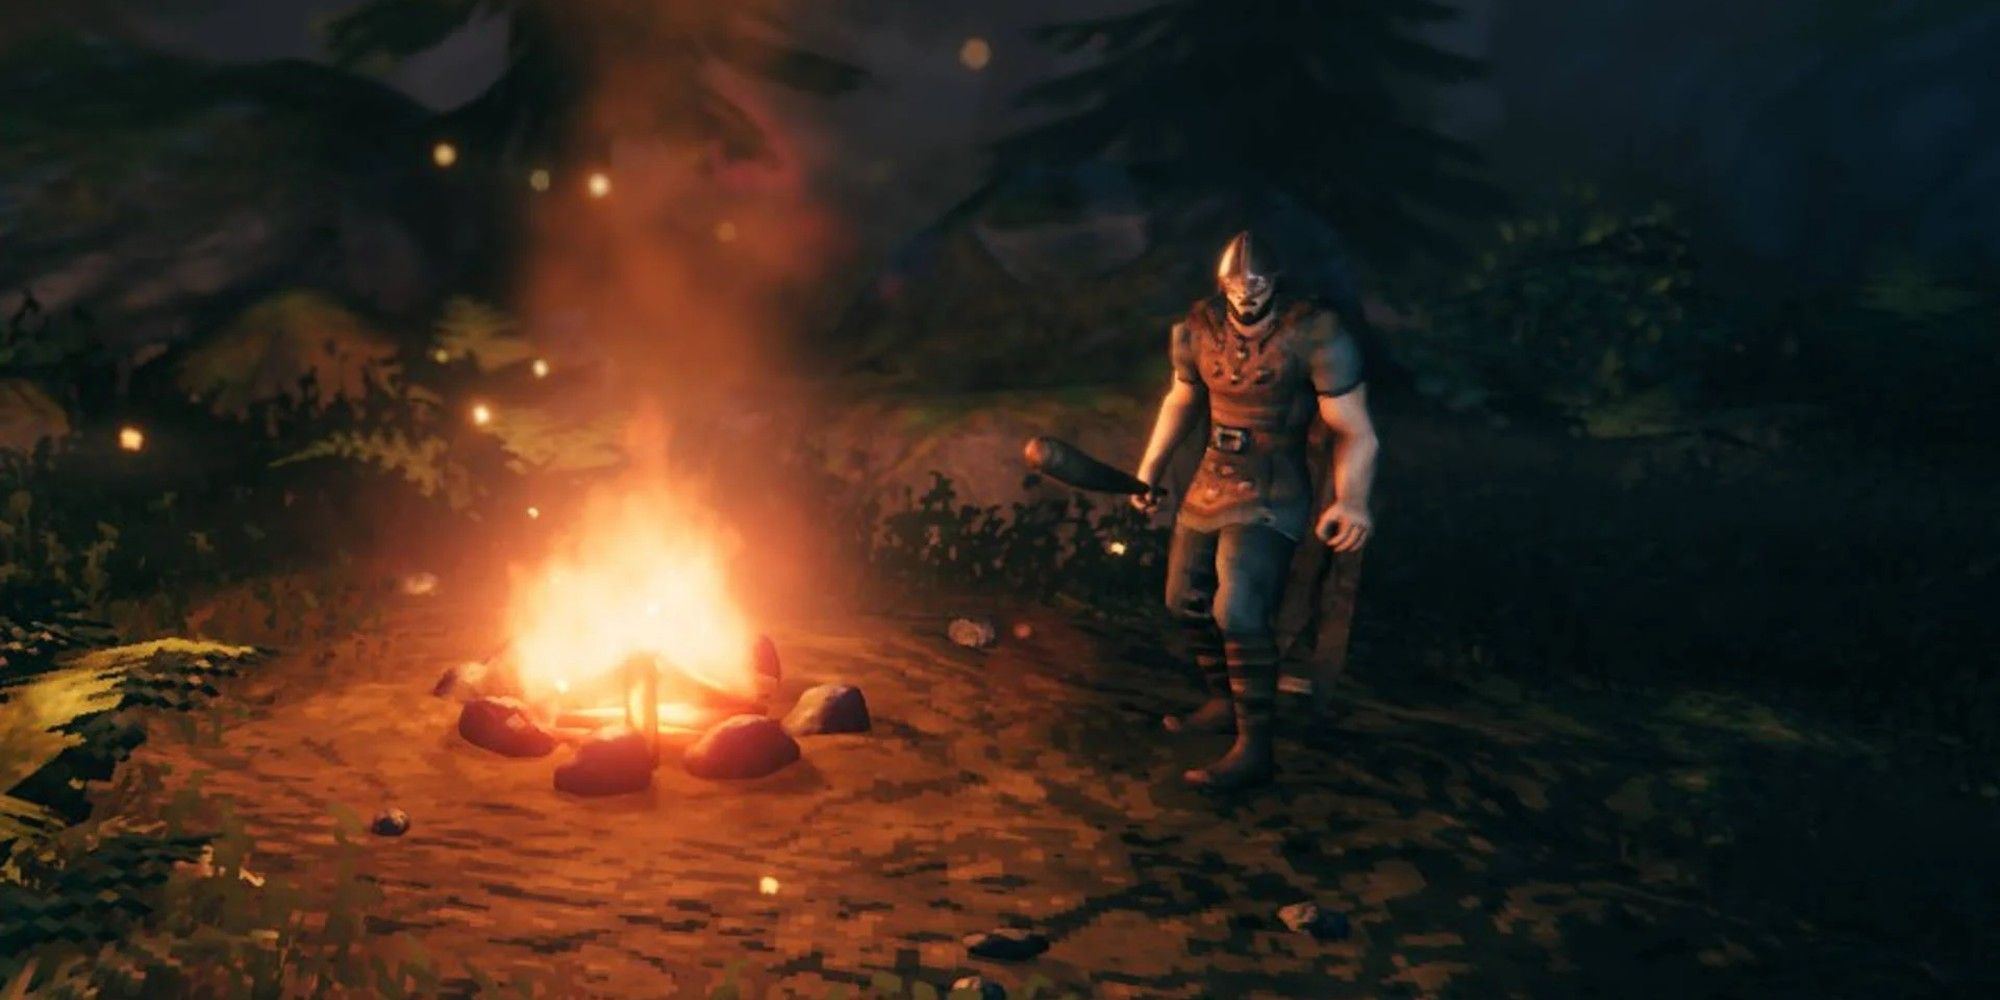 A player builds a campfire in Valheim.